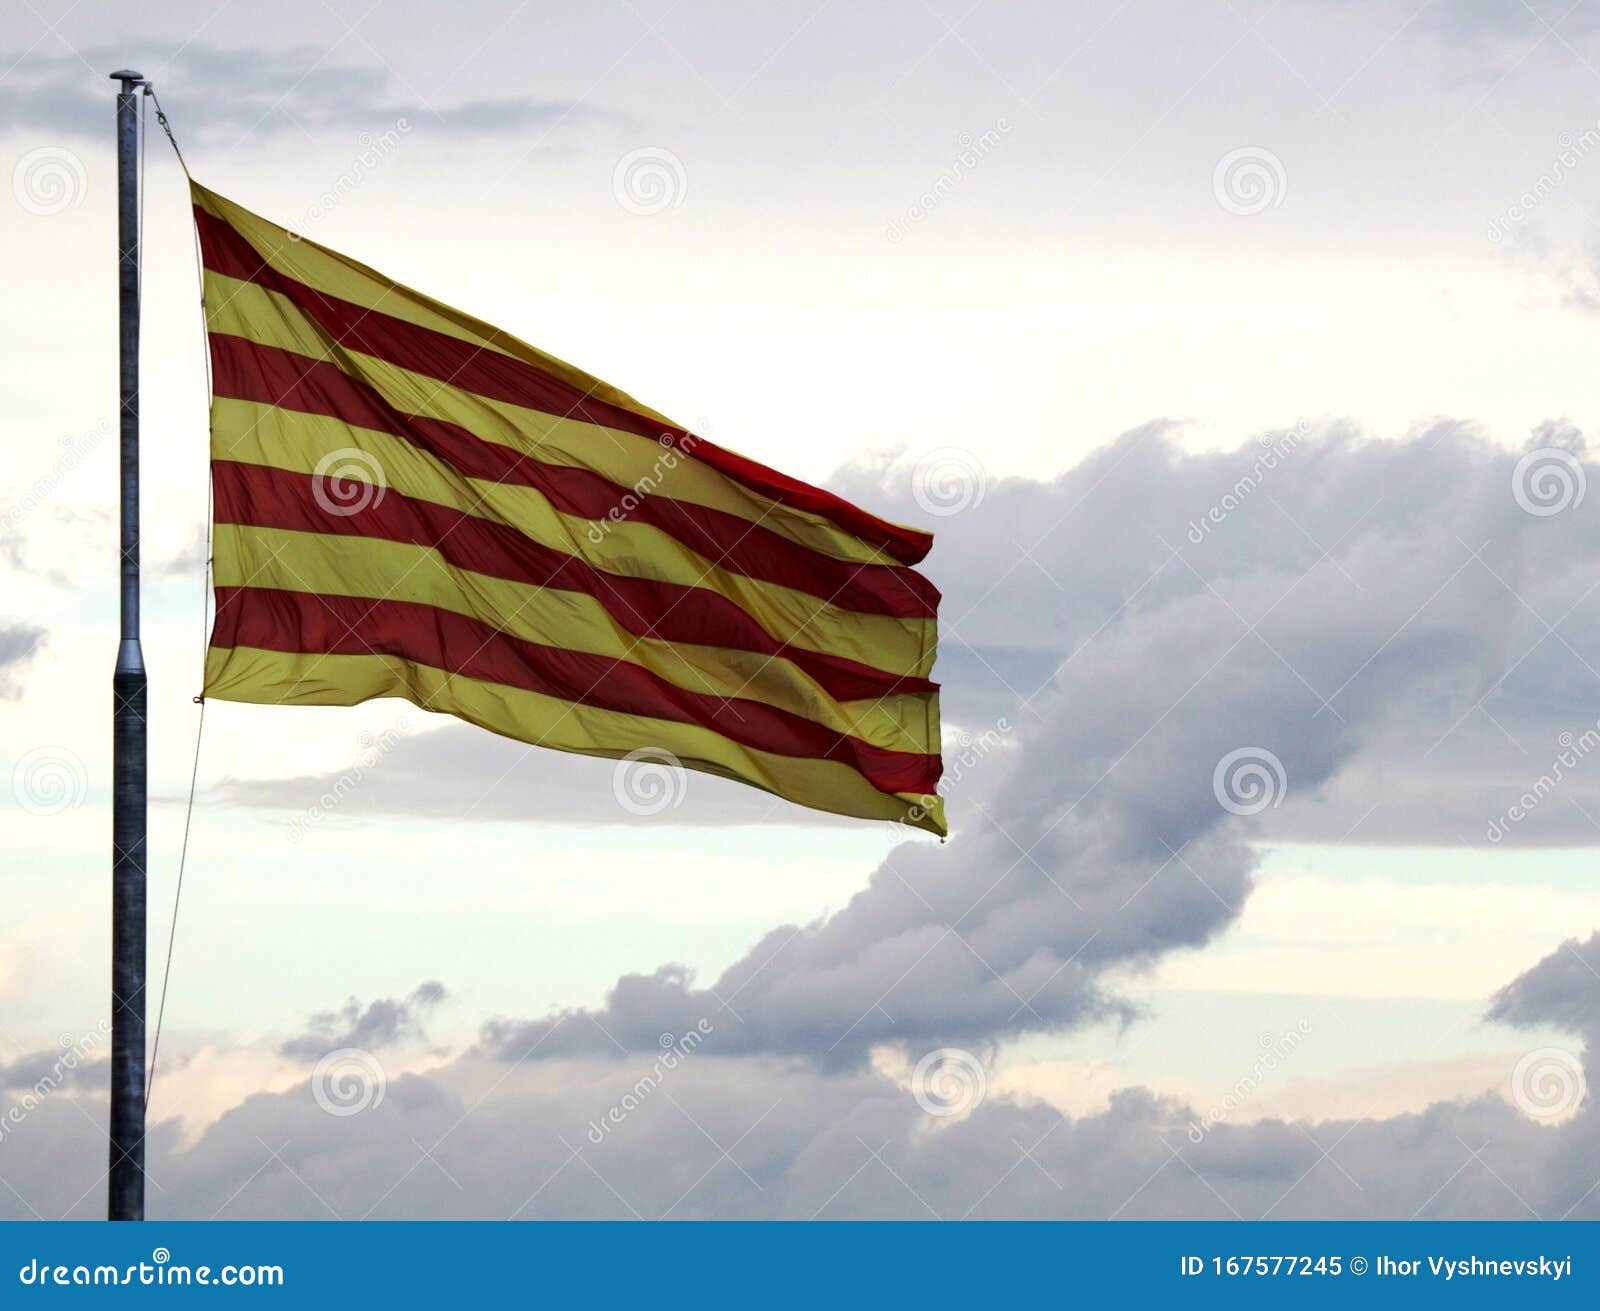 Barcelona Catalonia Spain: Catalan Flag Waving on the Wind Stock Image ...